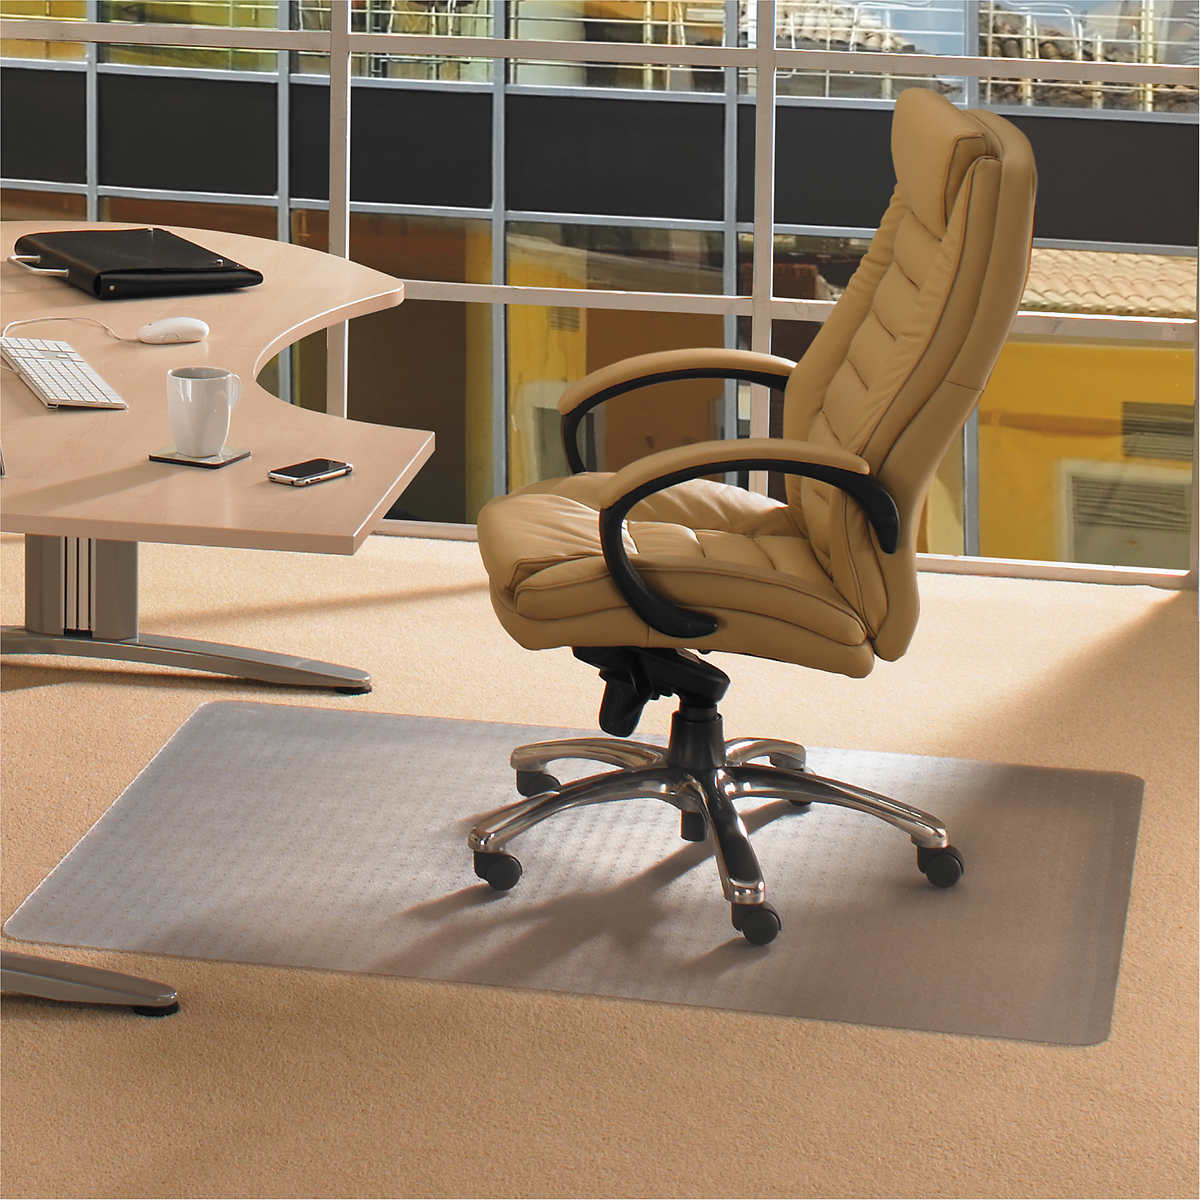 Floortex Cleartex Advantagemat Phthalate Free PVC Chair Mat for Low Pile Carpet 